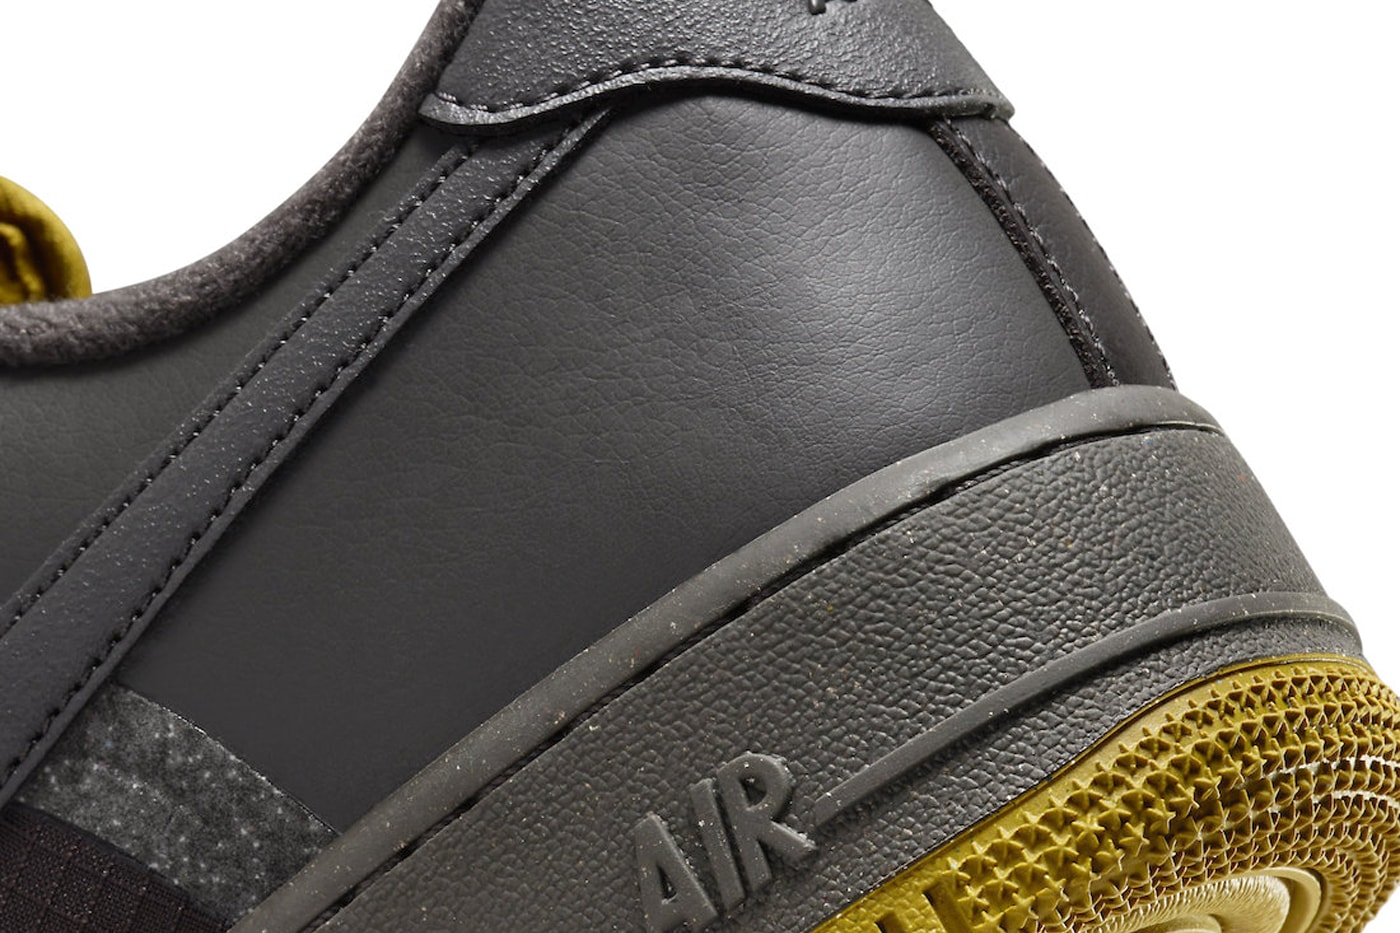 Nike Air Force 1 Low Surfaces in "Medium Ash" FB8877-200 Release info Medium Ash/Medium Ash-Bronzine-Blue Tint af1 swoosh shoes sneakers everyday